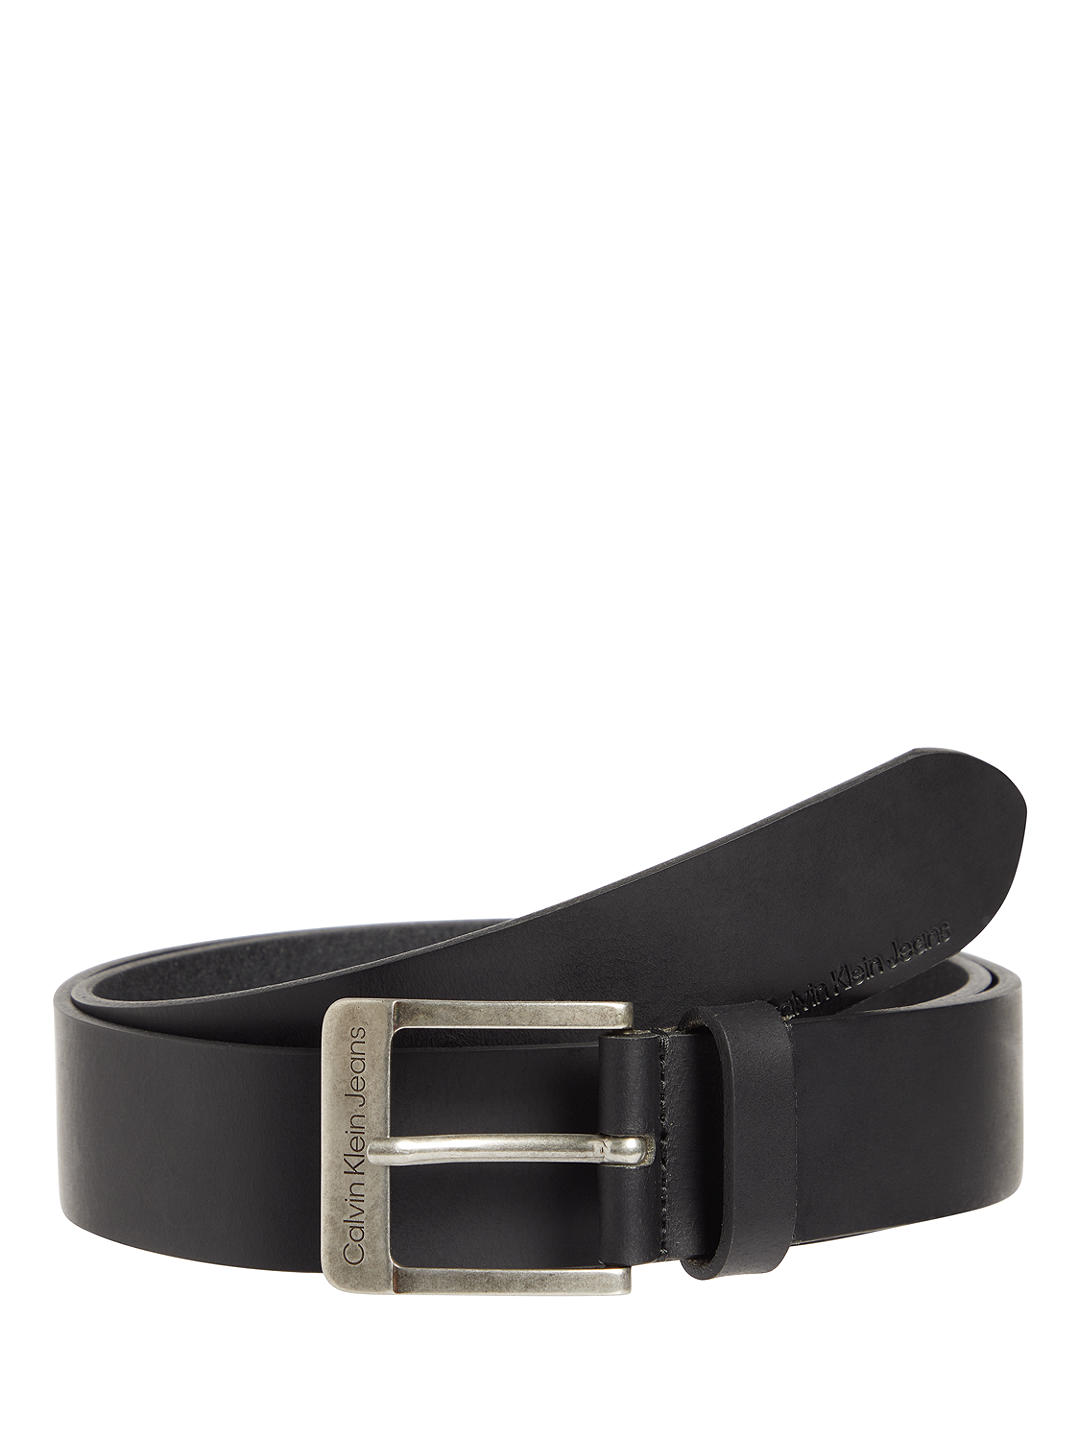 Calvin Klein Leather Belt, Black